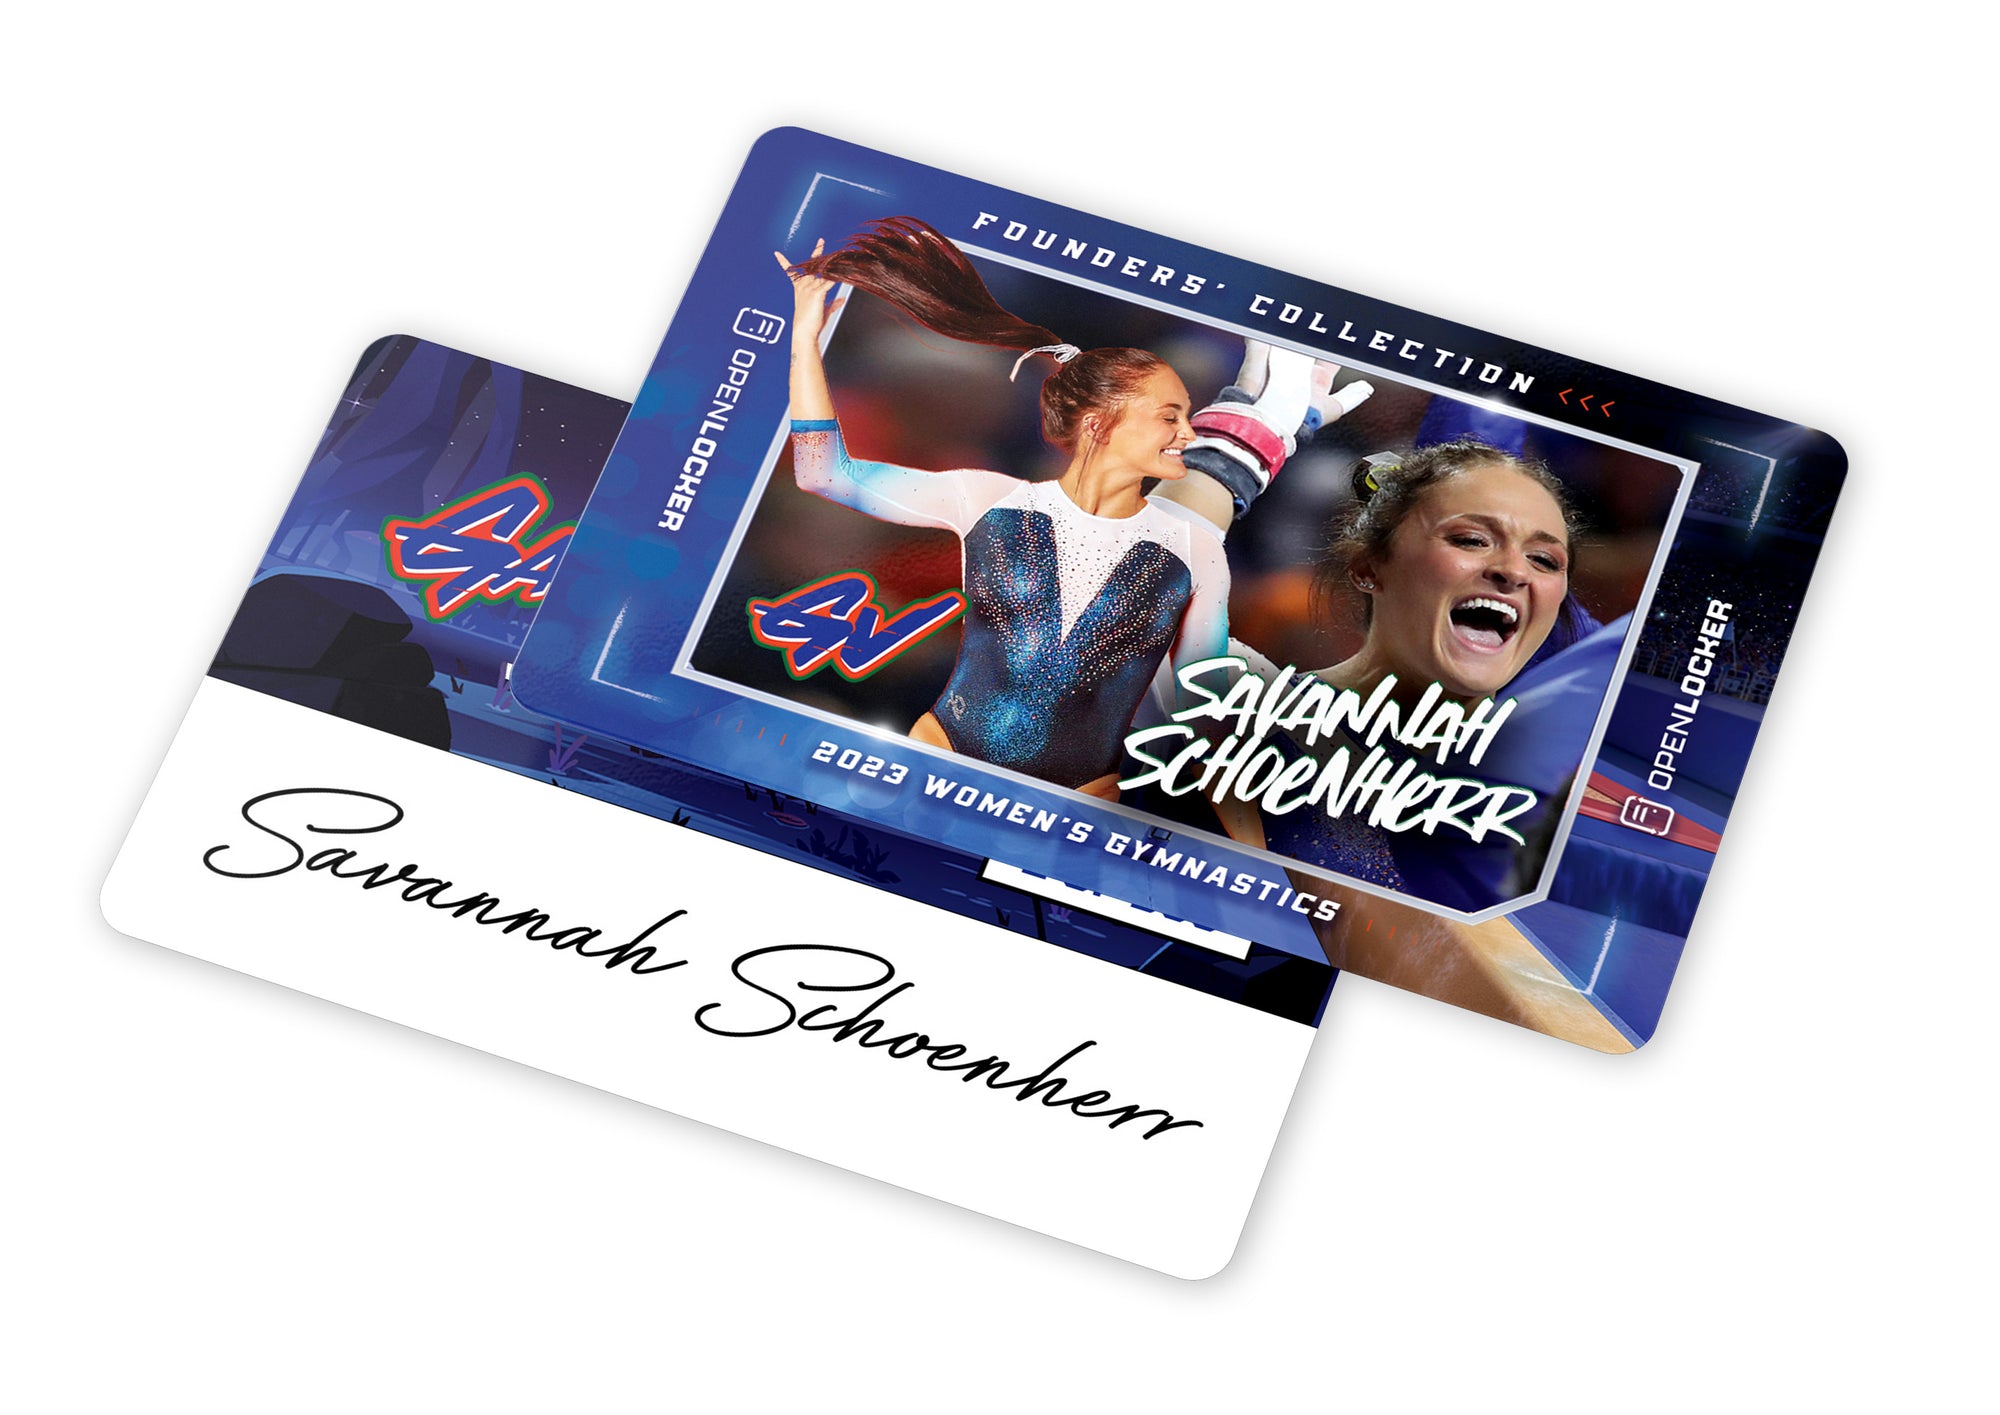 Gataverse Gymnastics Collection Autographed Platinum Card: Savannah Schoenherr